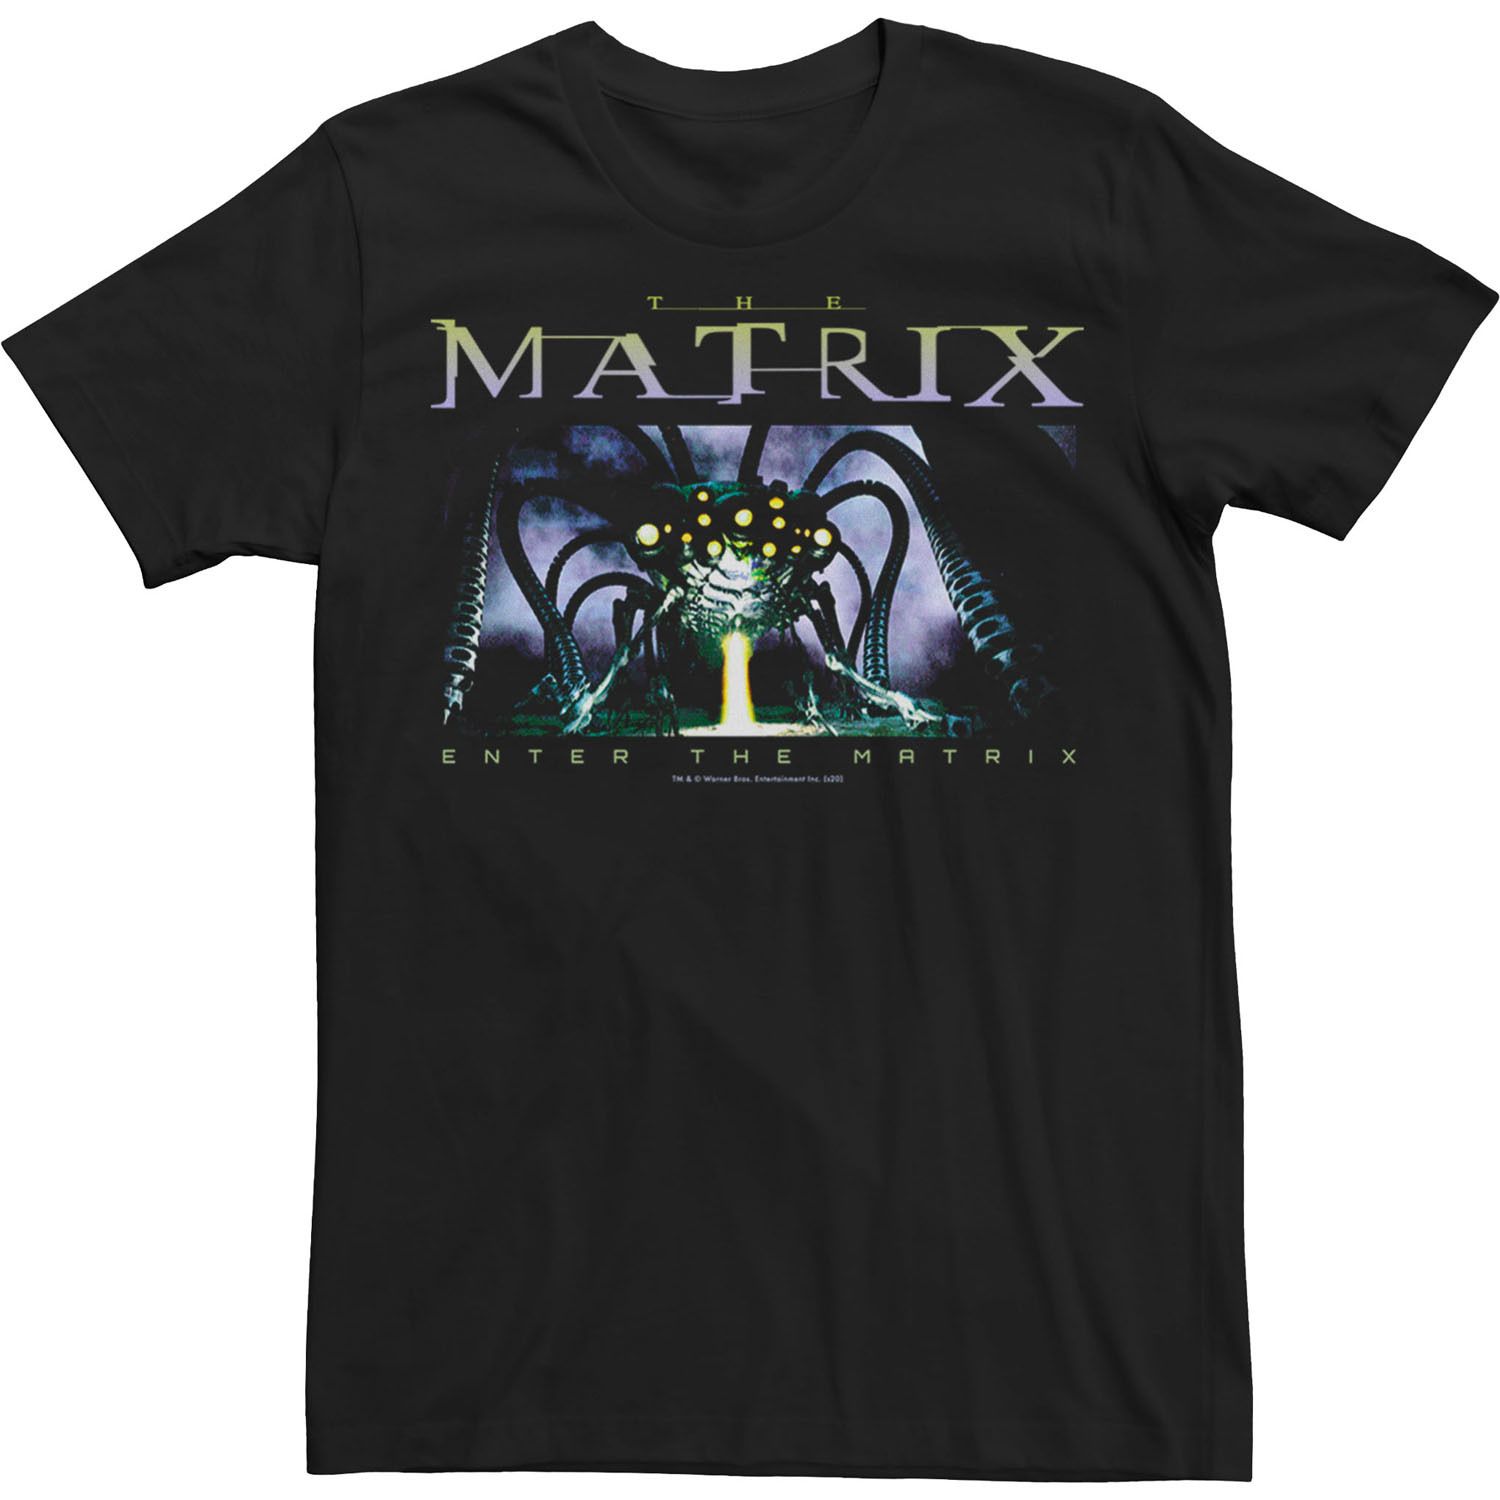 Мужская футболка с плакатом «Матрица из реального мира» Licensed Character дизайн упаковки для реального мира